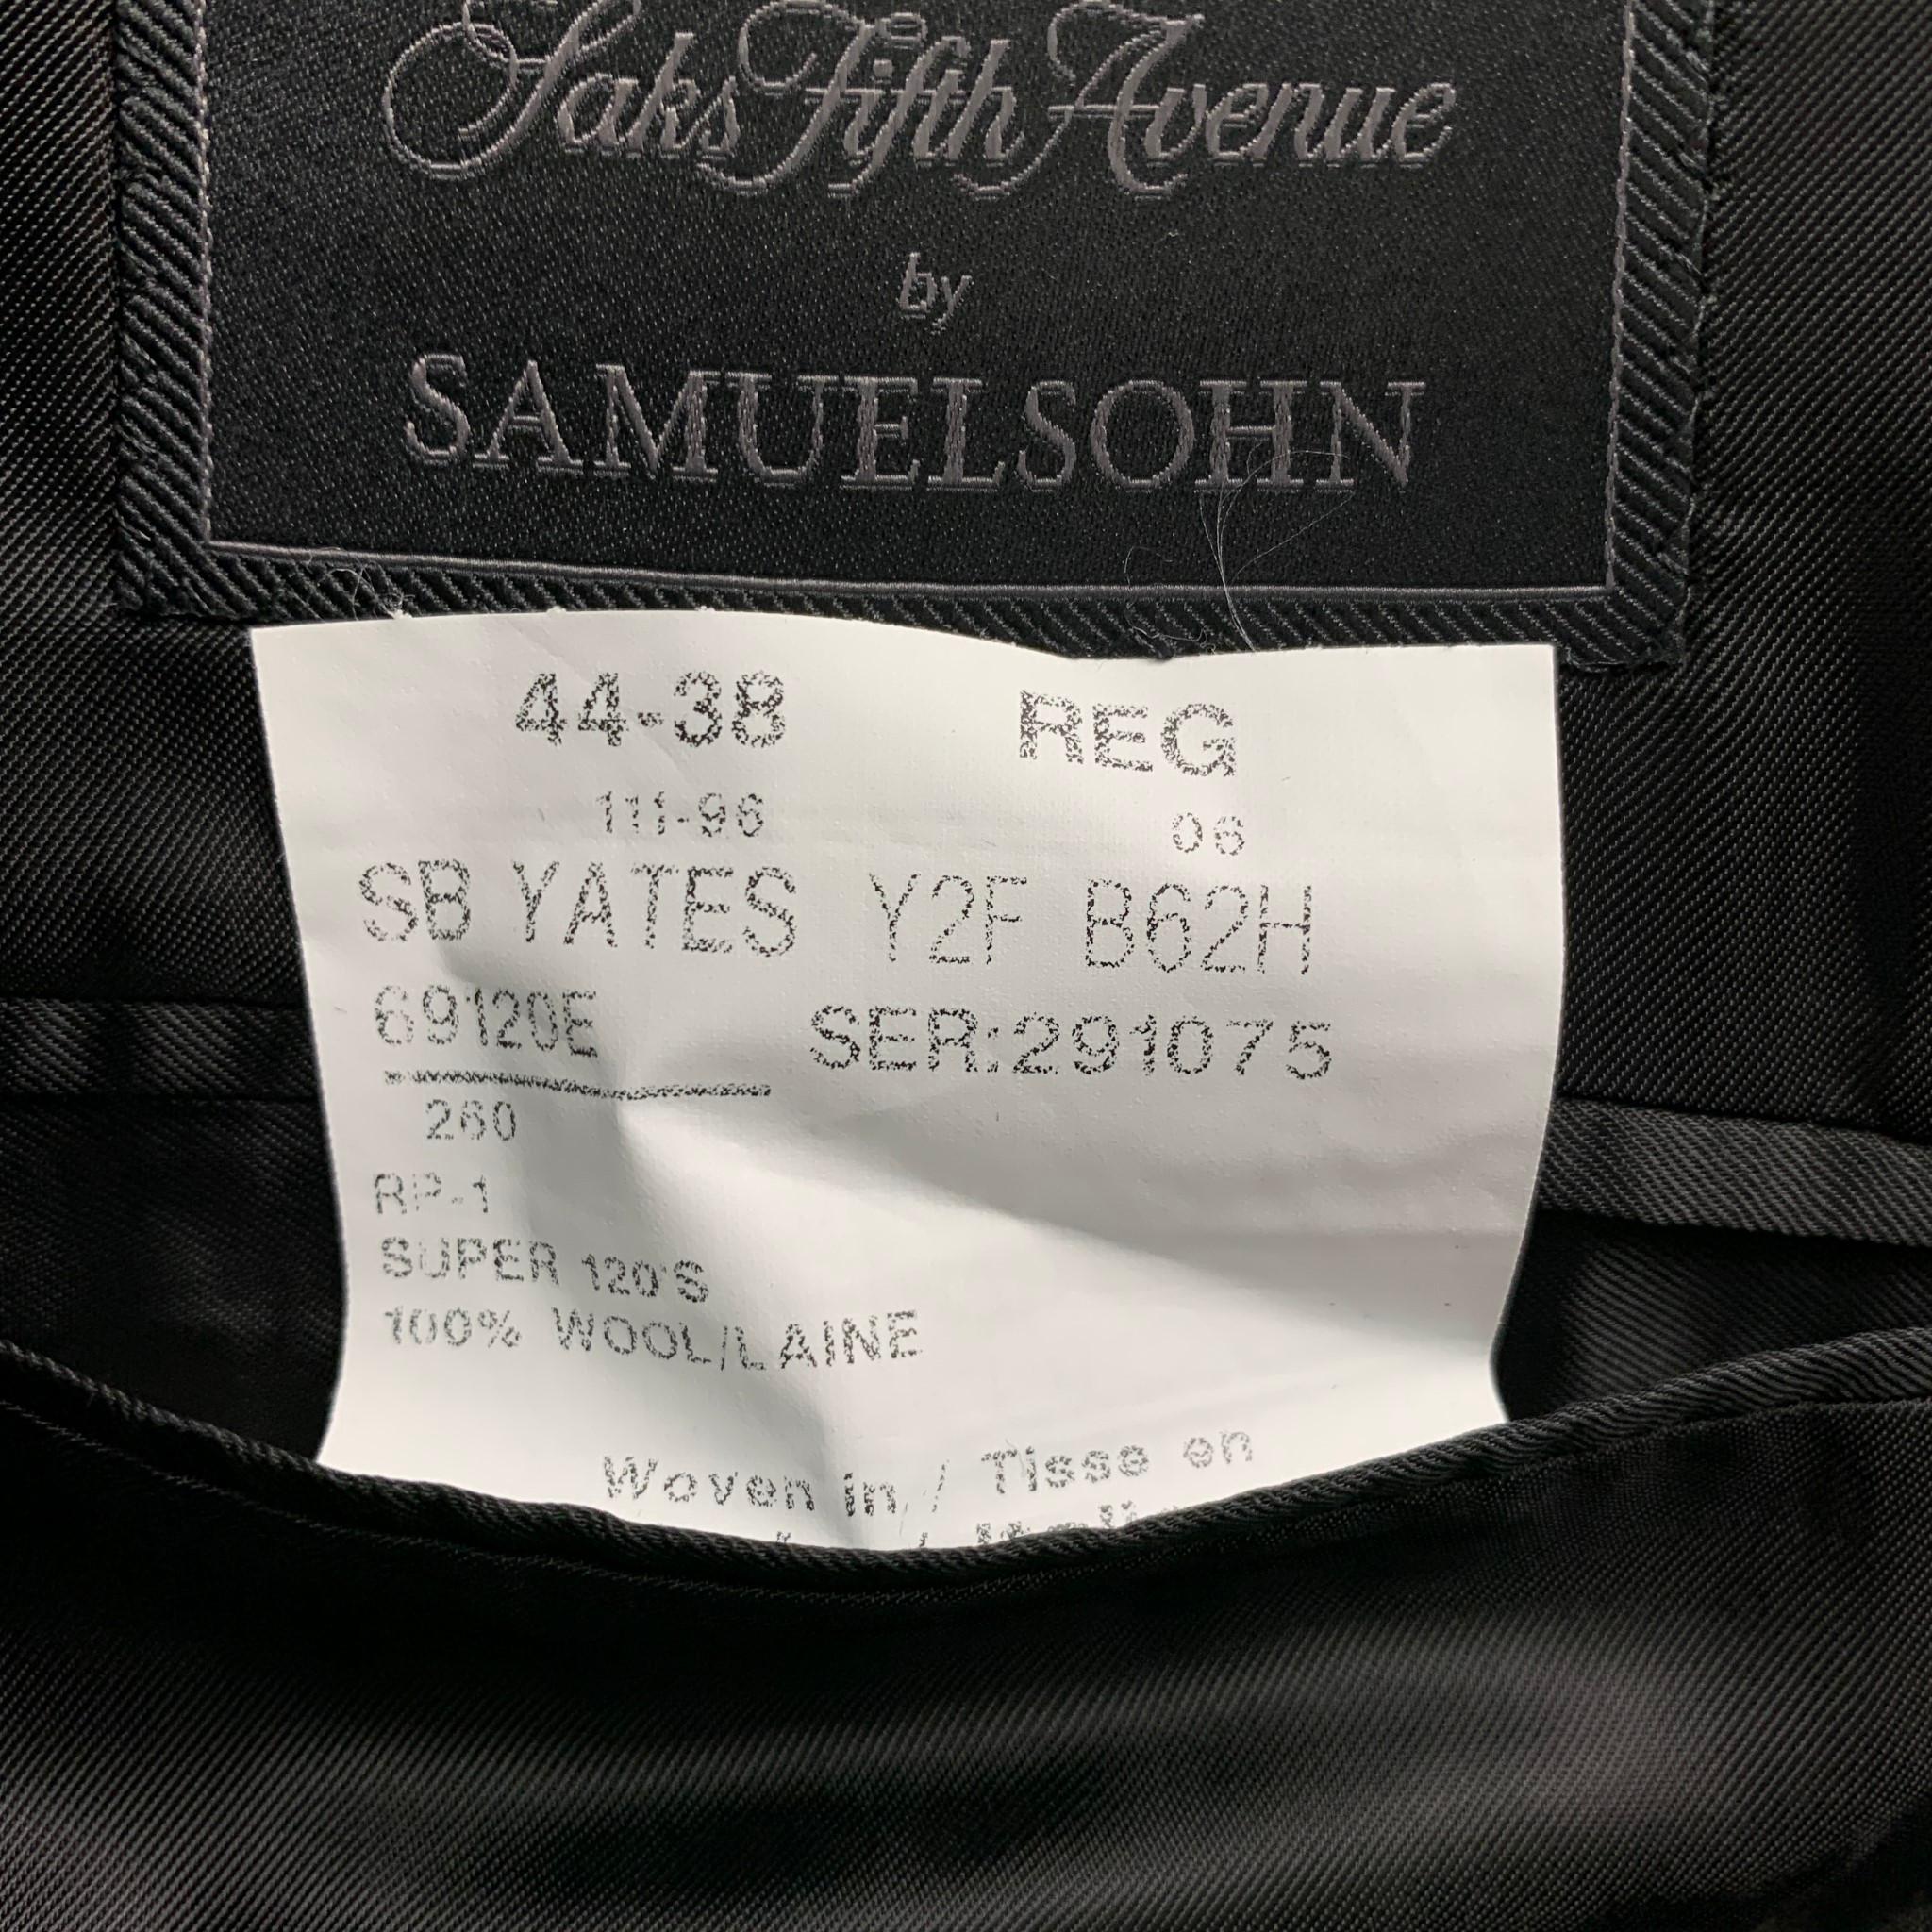 SAKS FIFTH AVENUE by Samuelsohn Size 44 Regular Black Wool Notch Lapel Suit 2